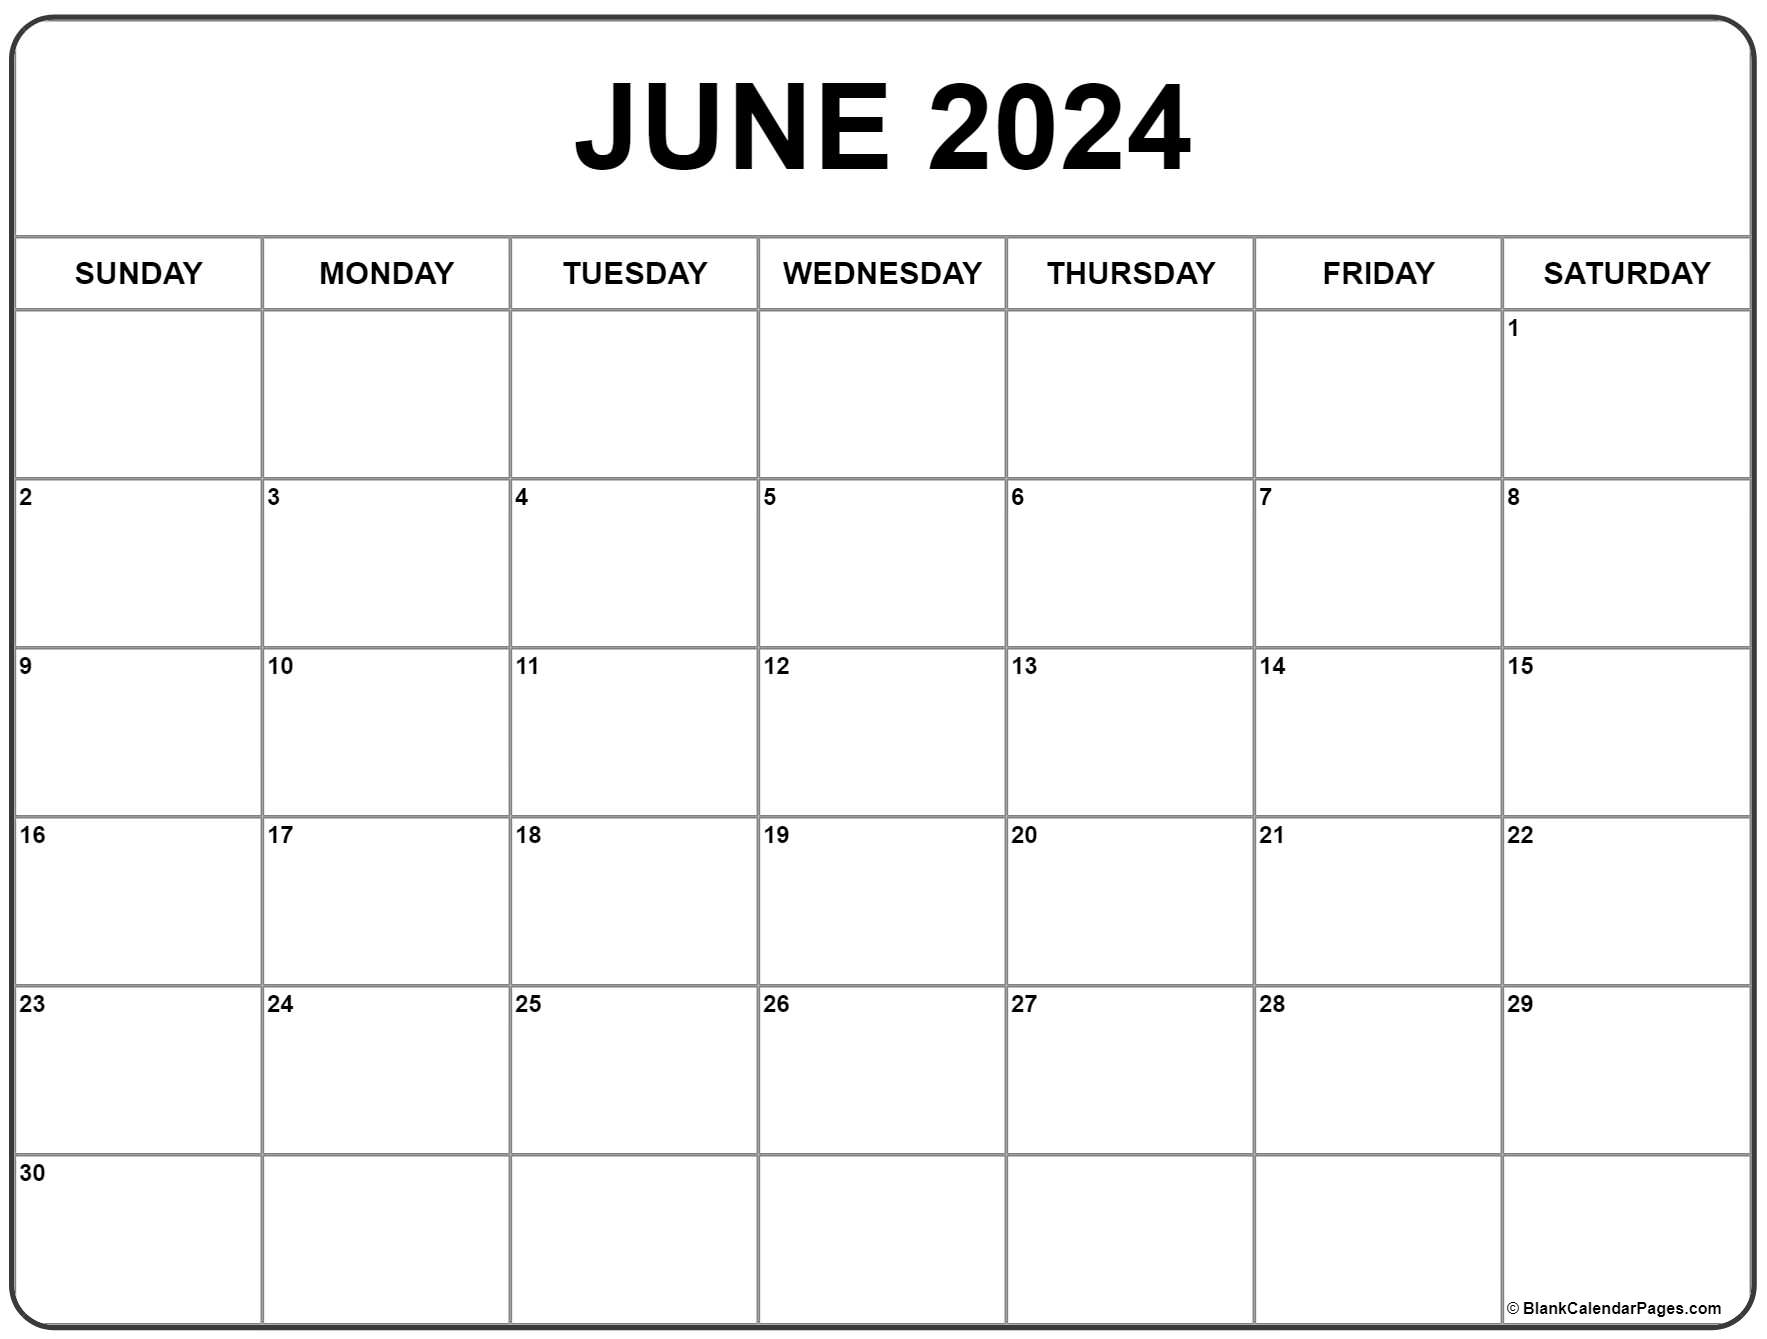 Print June 2022 Calendar June 2022 Calendar | Free Printable Calendar Templates